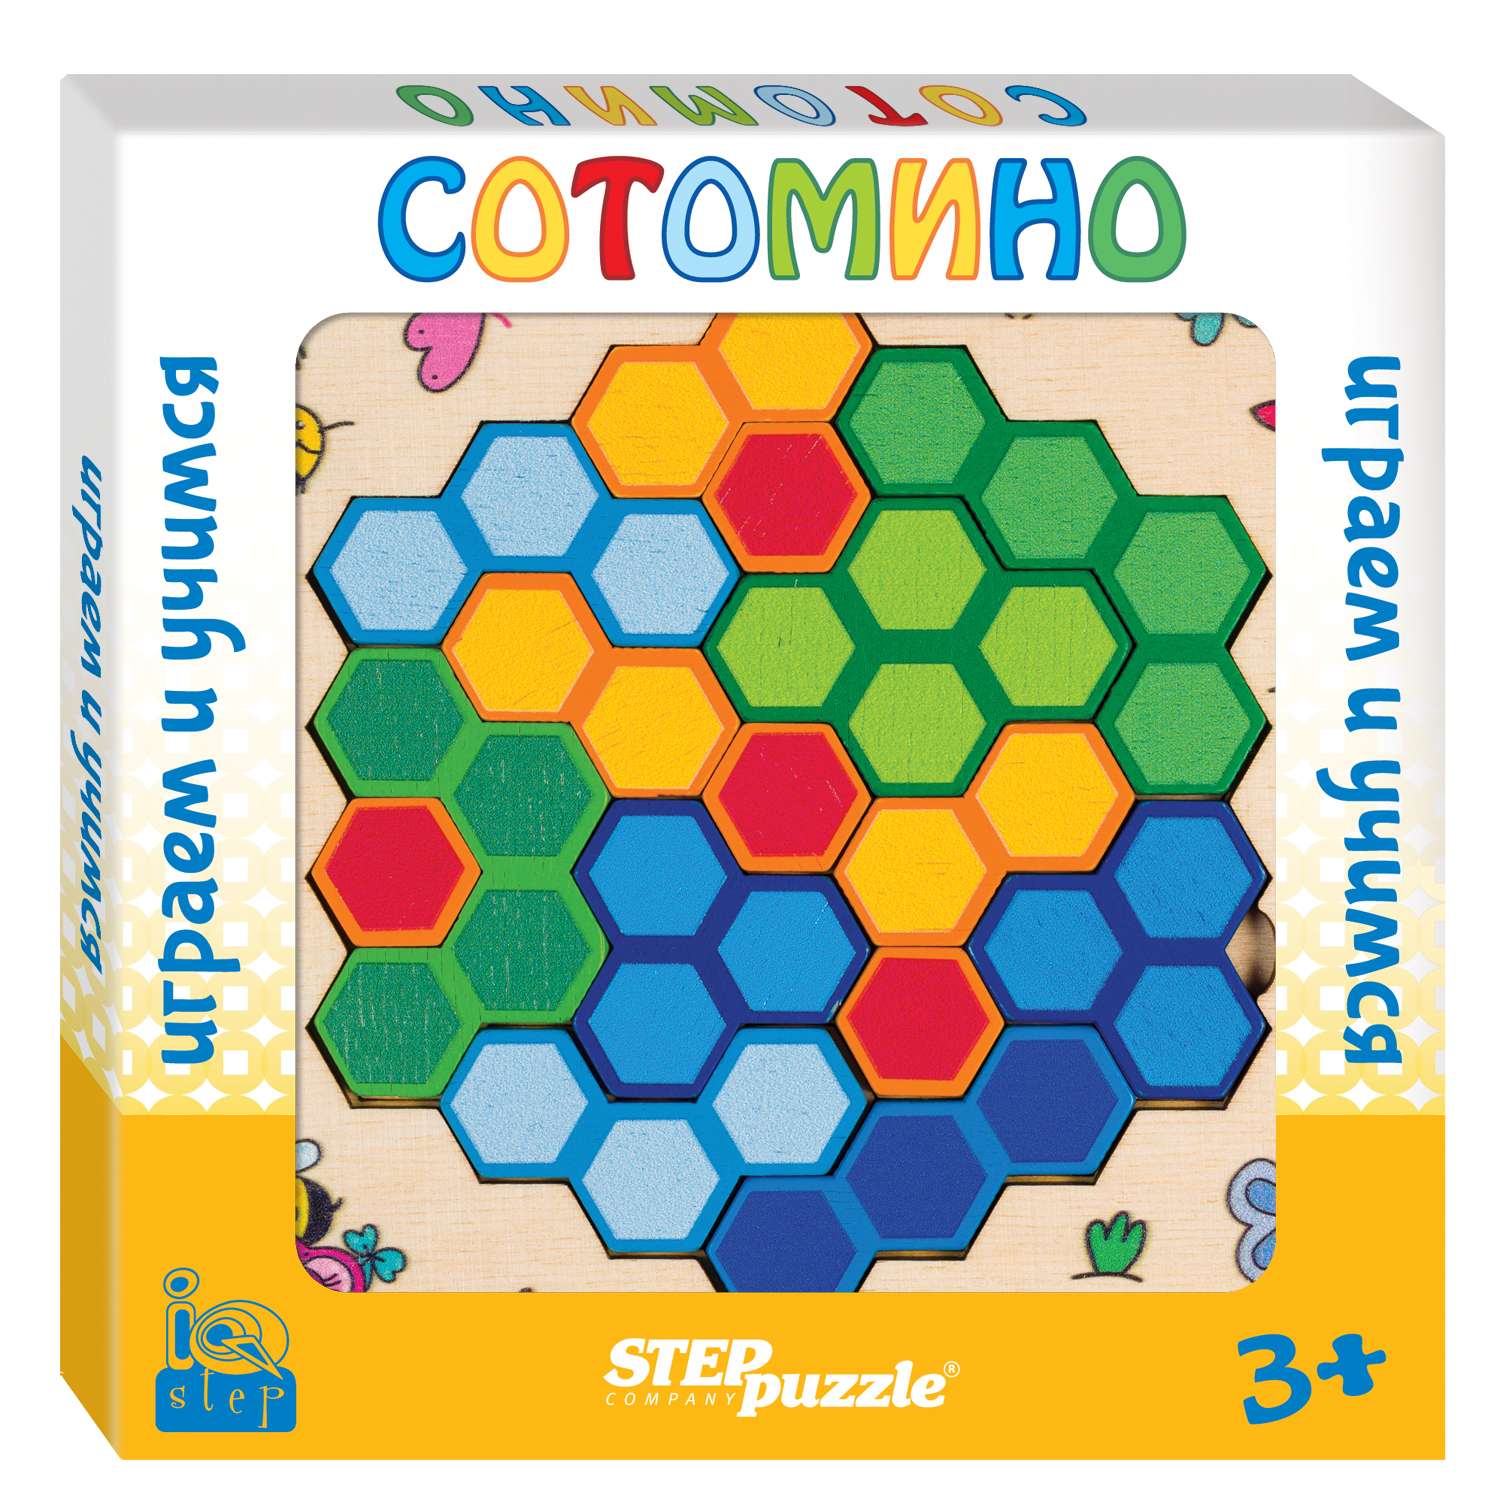 Игра развивающая Step Puzzle Сотомино IQ step 89838 - фото 1